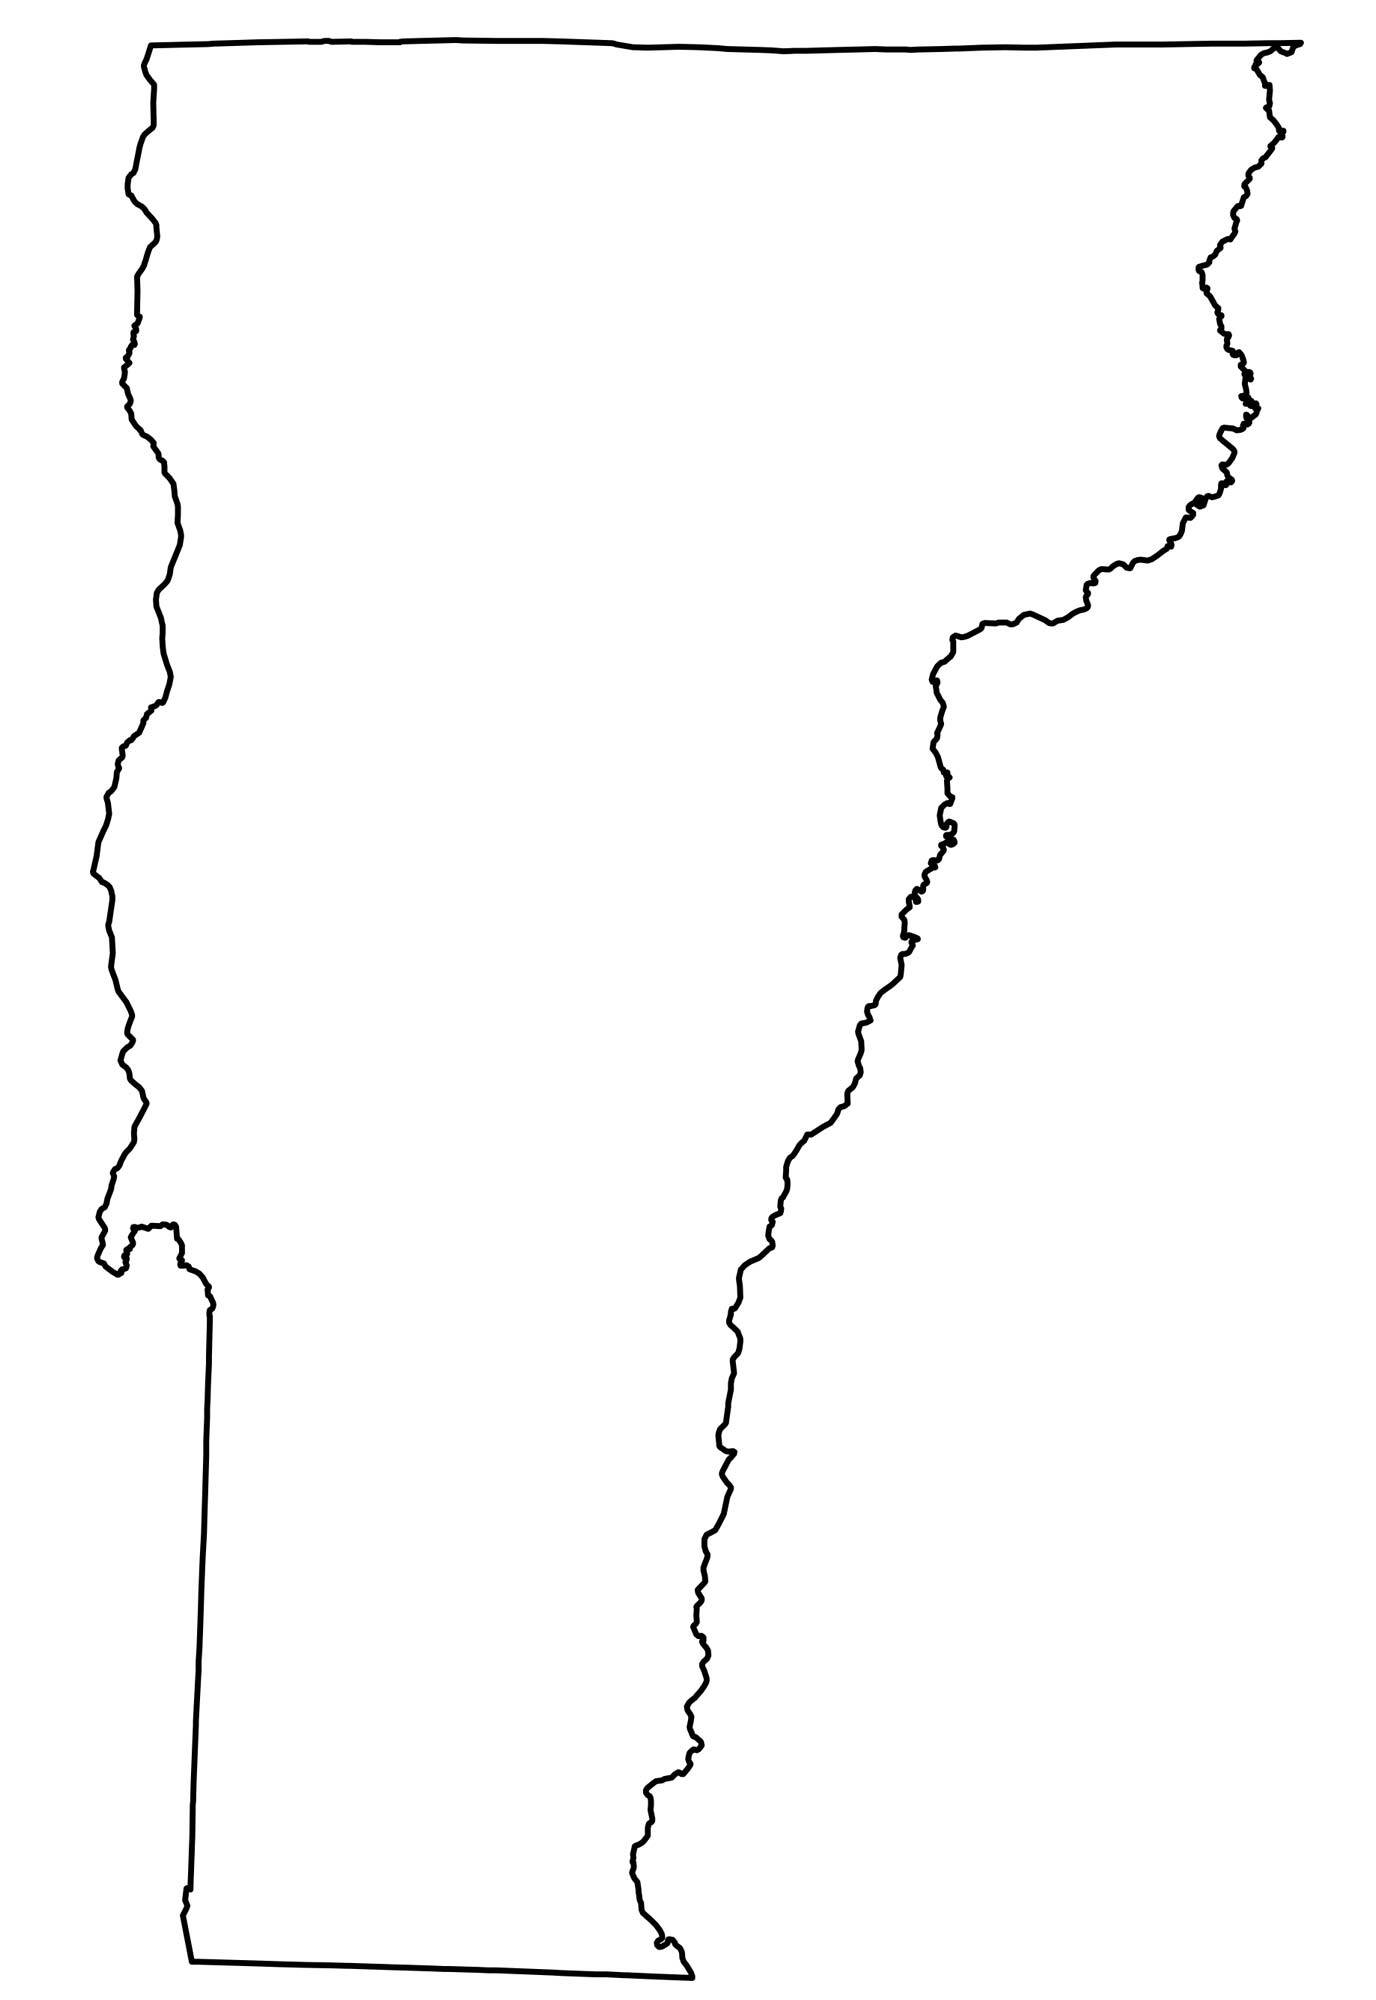 Vermont-Outline-Map.jpg